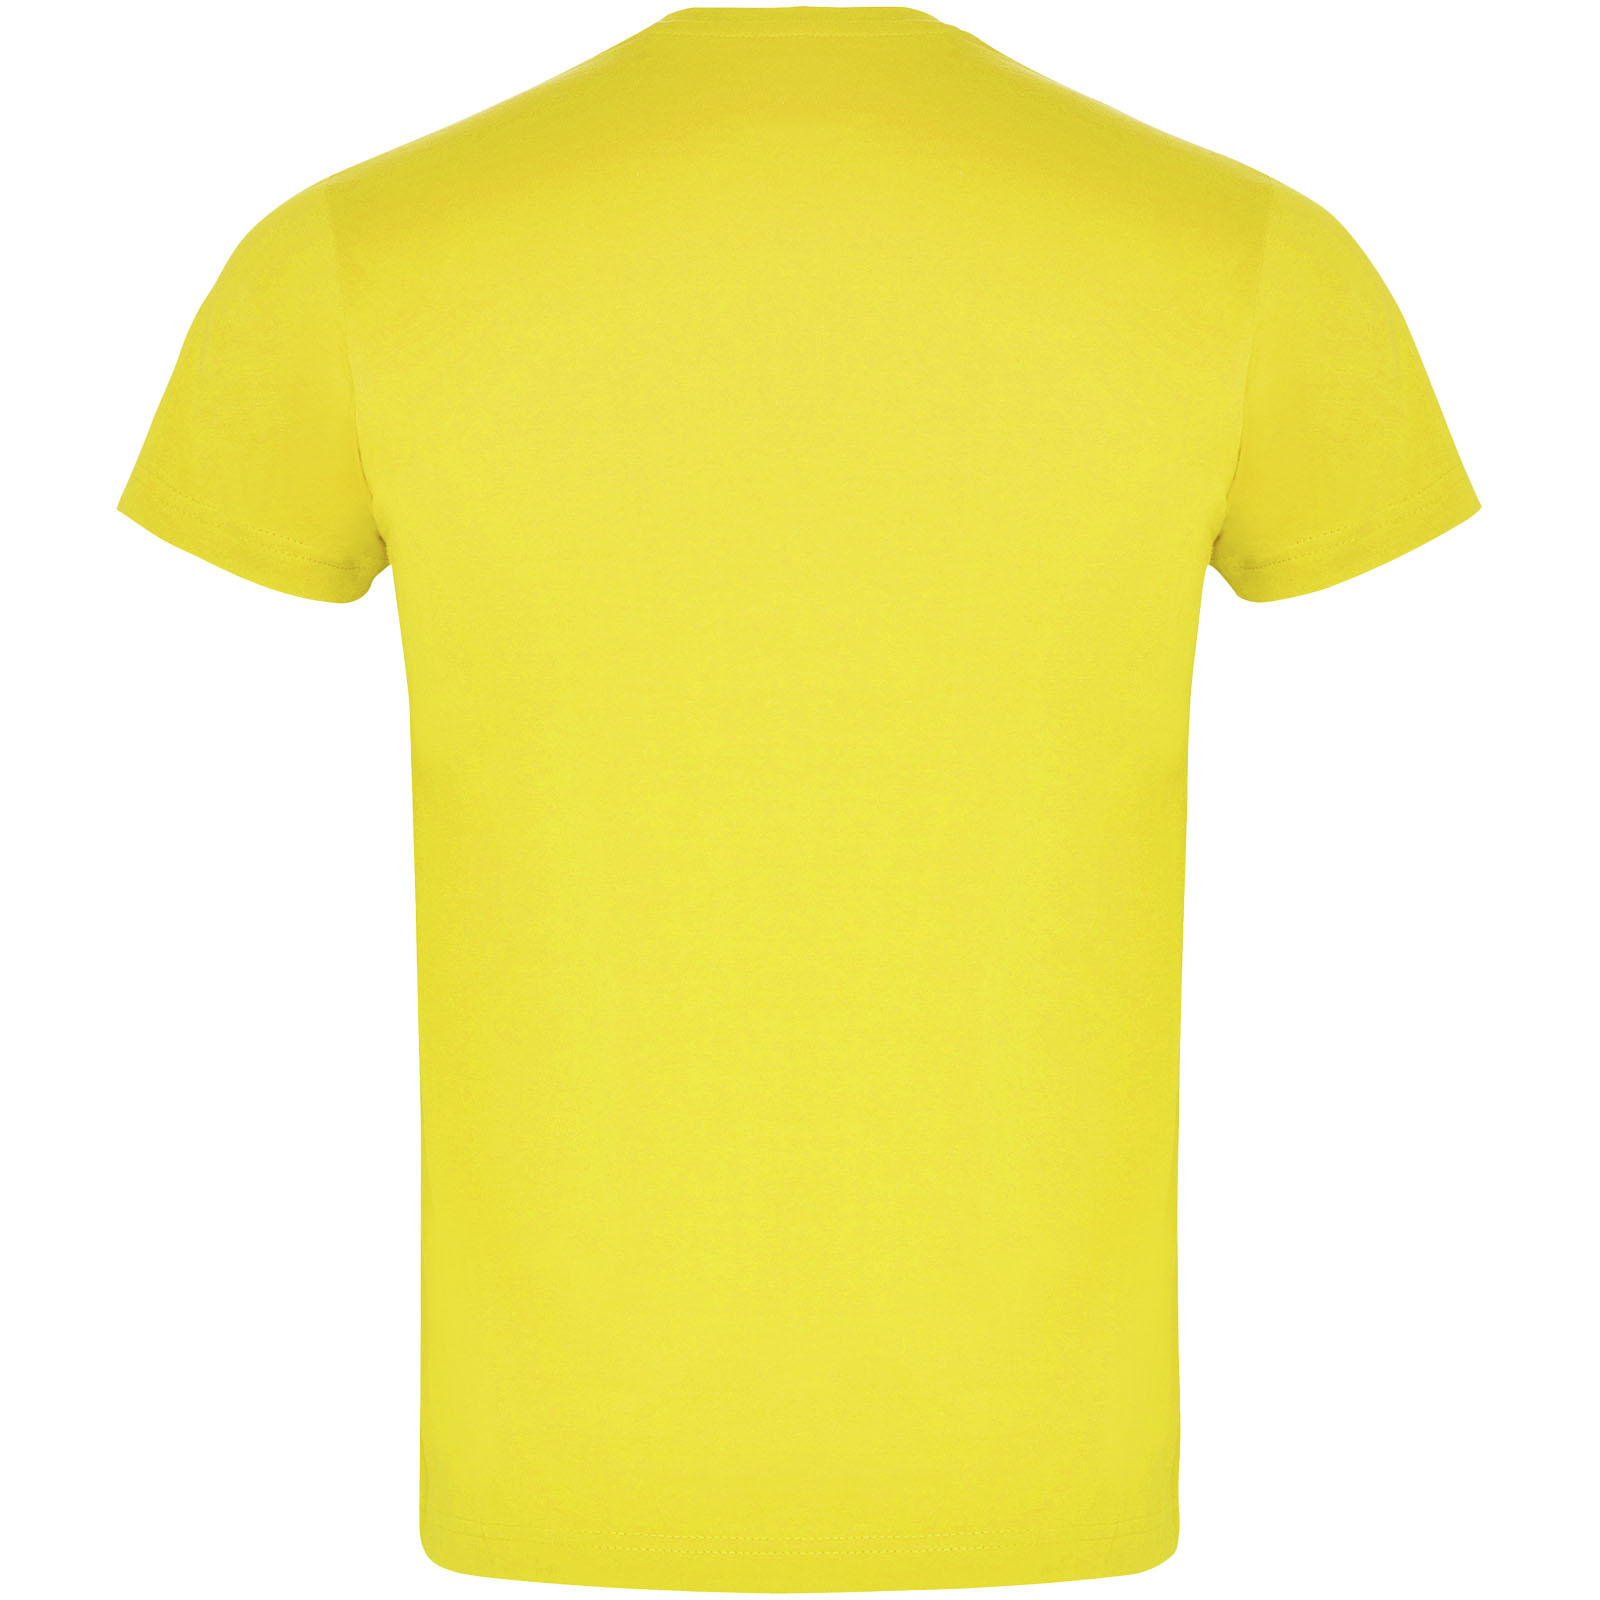 Advertising T-shirts - Atomic short sleeve unisex t-shirt - 1